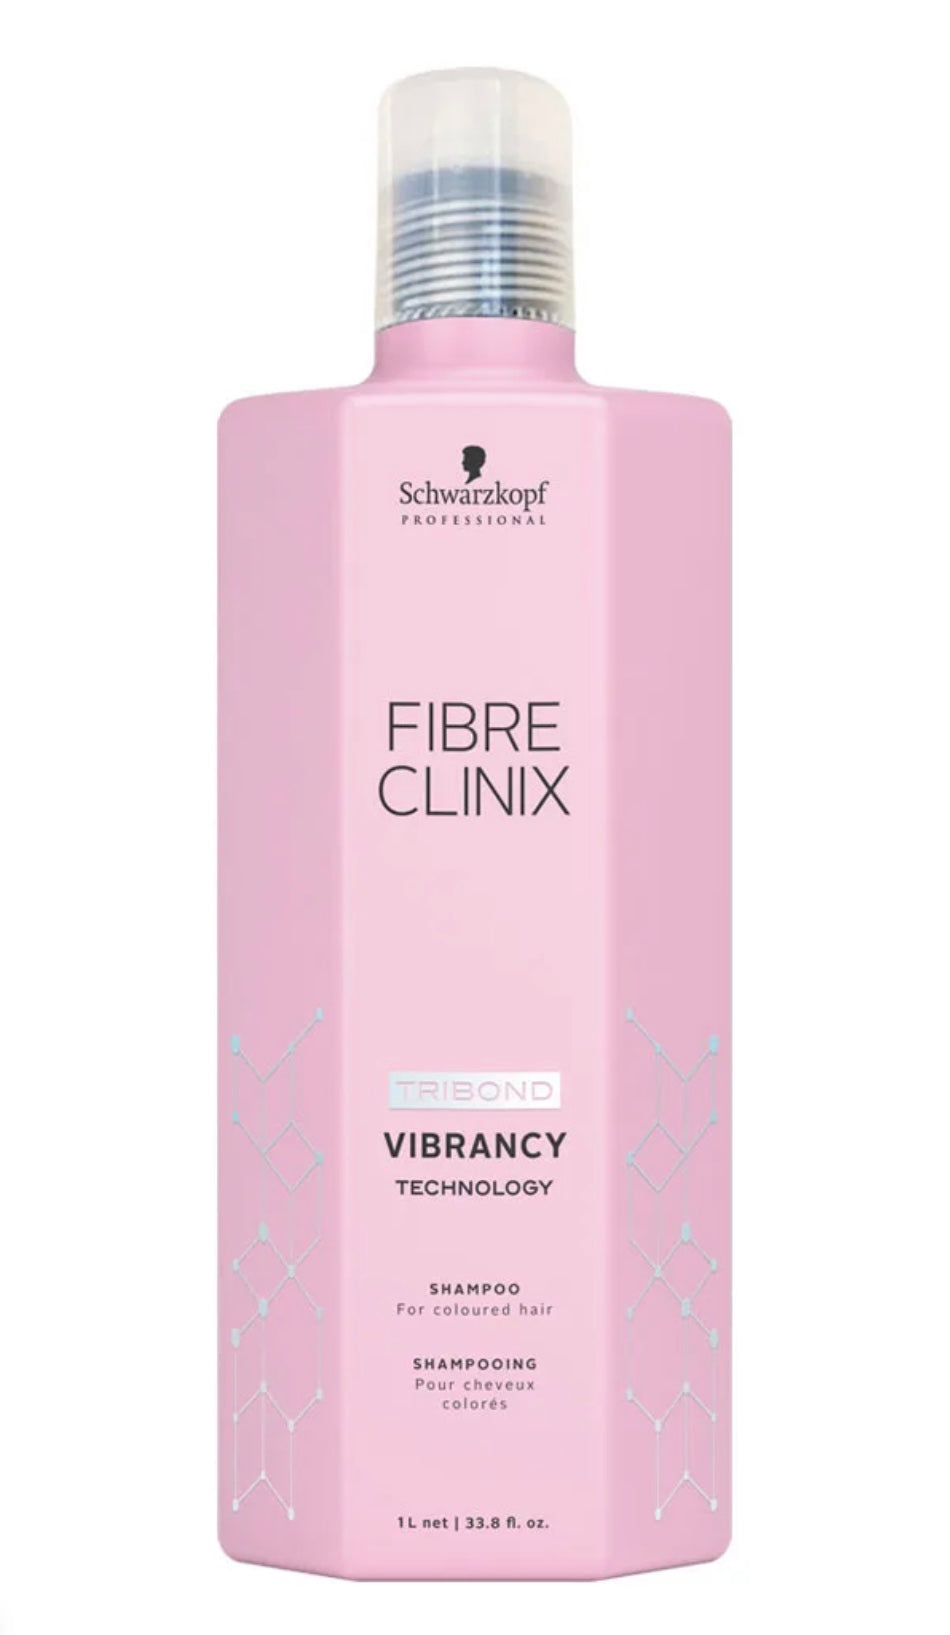 Schwarzkopf -Fibre clinix shampoo 33.8 fl. oz./ 1 L